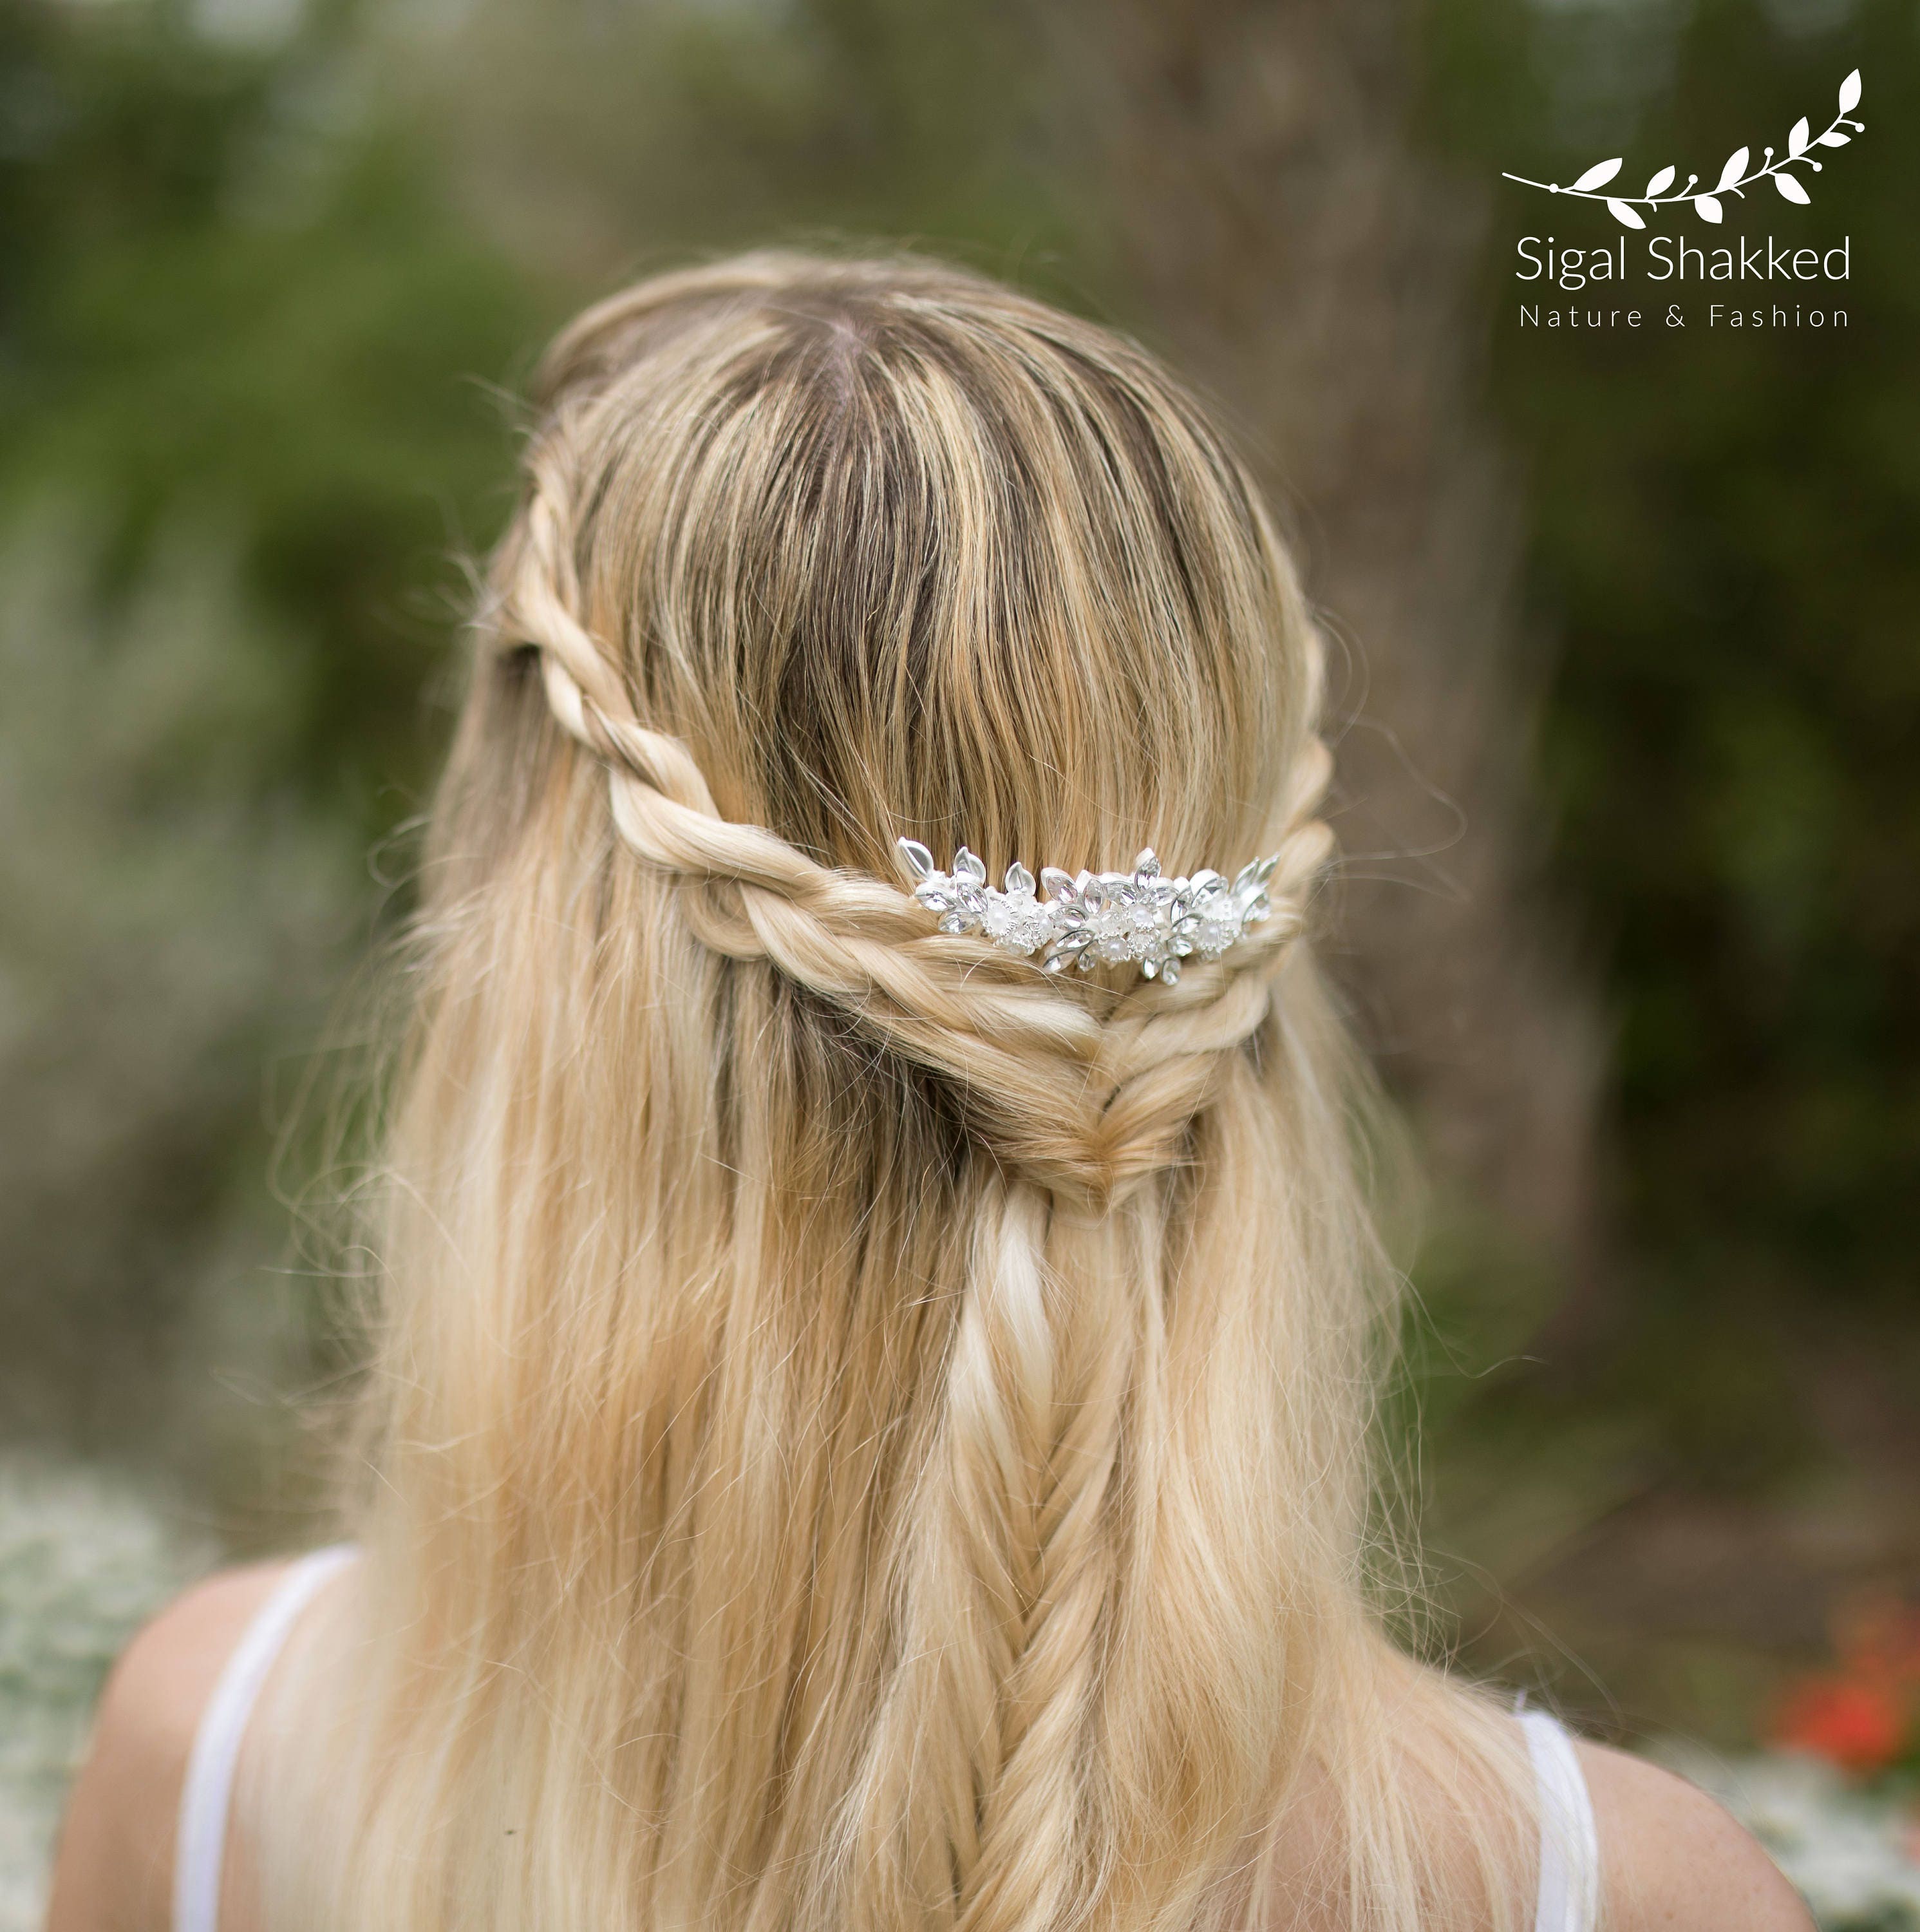 Swarovski Crystals, Pearls, Rhinestones Floral Bridal Hair piece